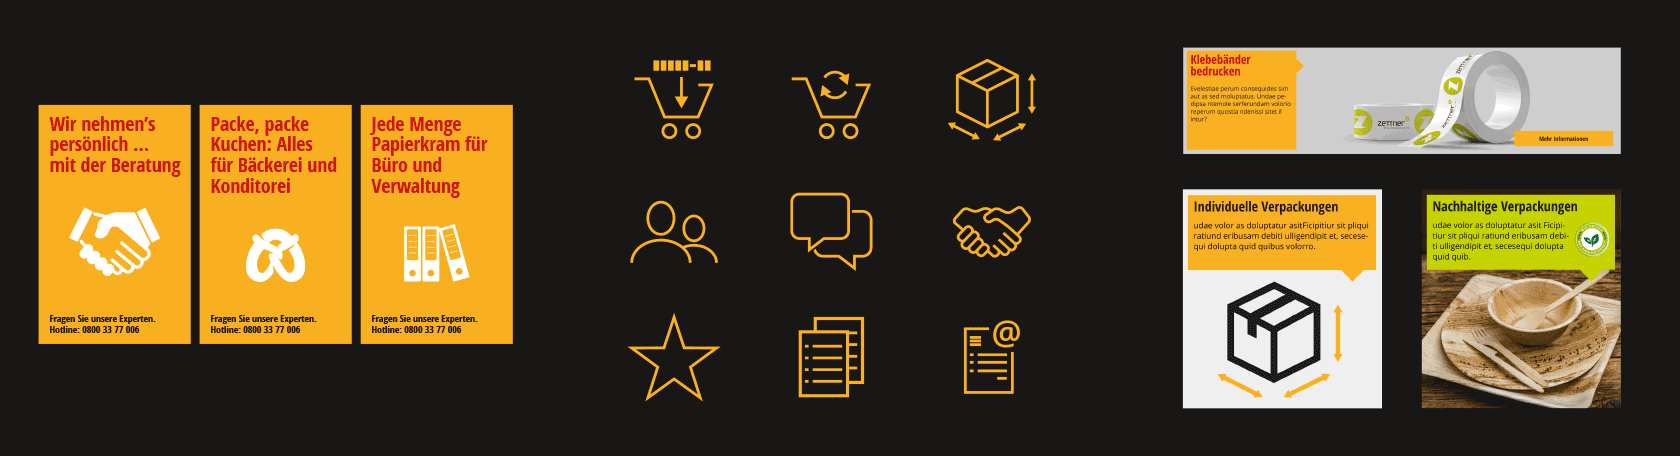 Moosmann digital commerce webdesign - elements